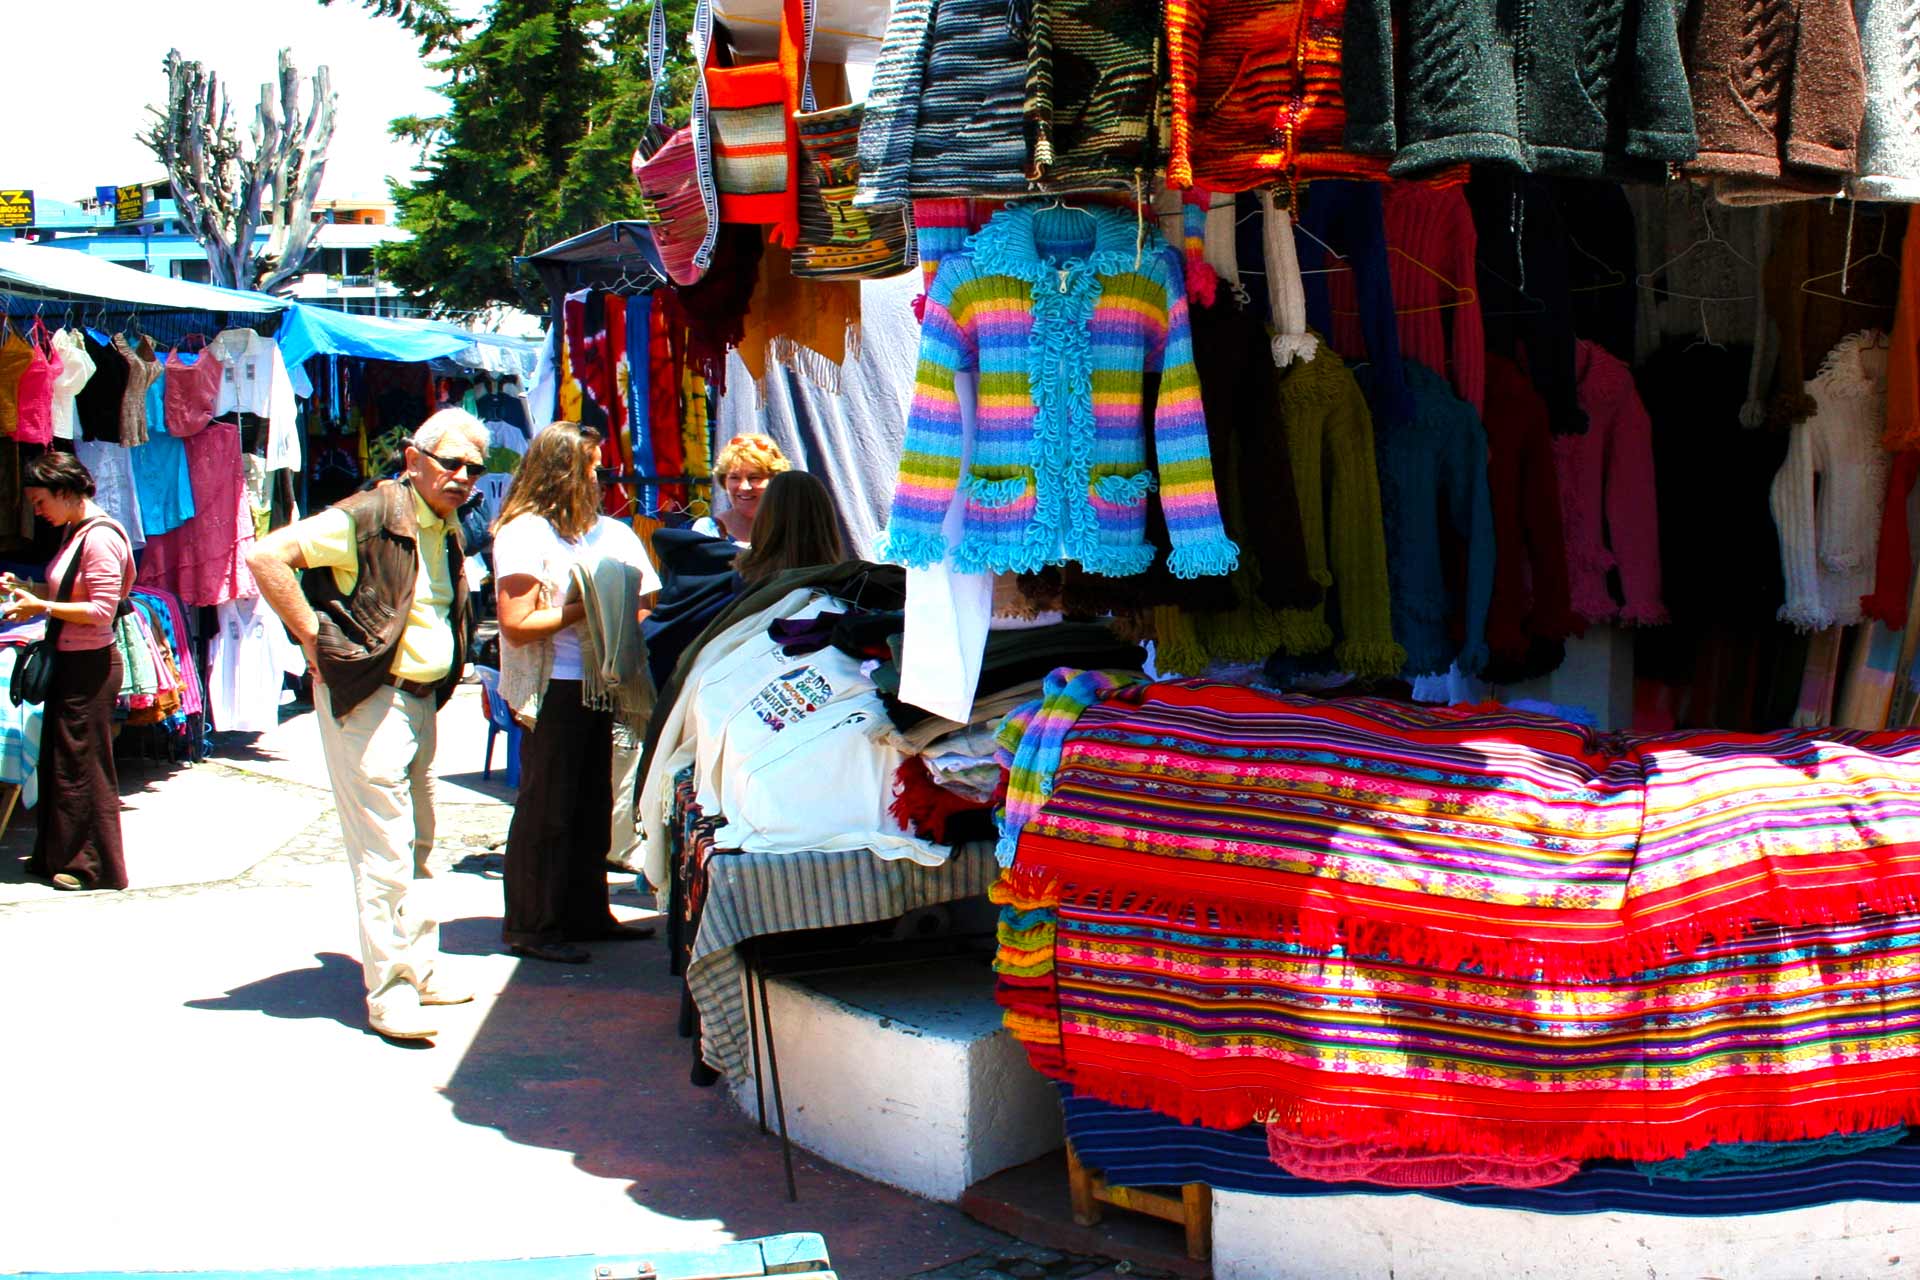 The Saturday crafts market in Otavalo